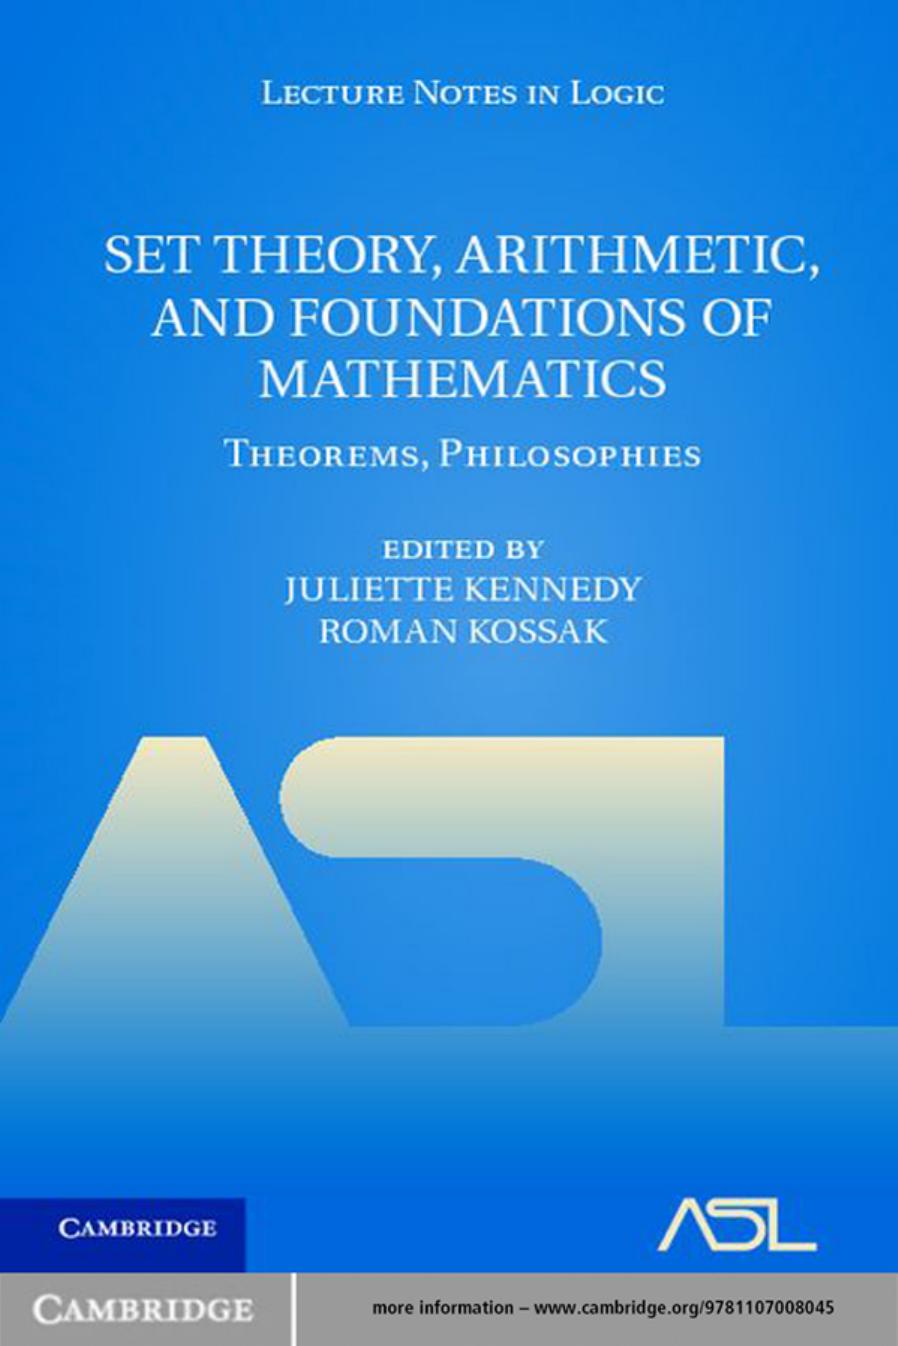 Set Theory, Arithmetic, and Foundations of Mathematics by Juliette Kennedy & Roman Kossak